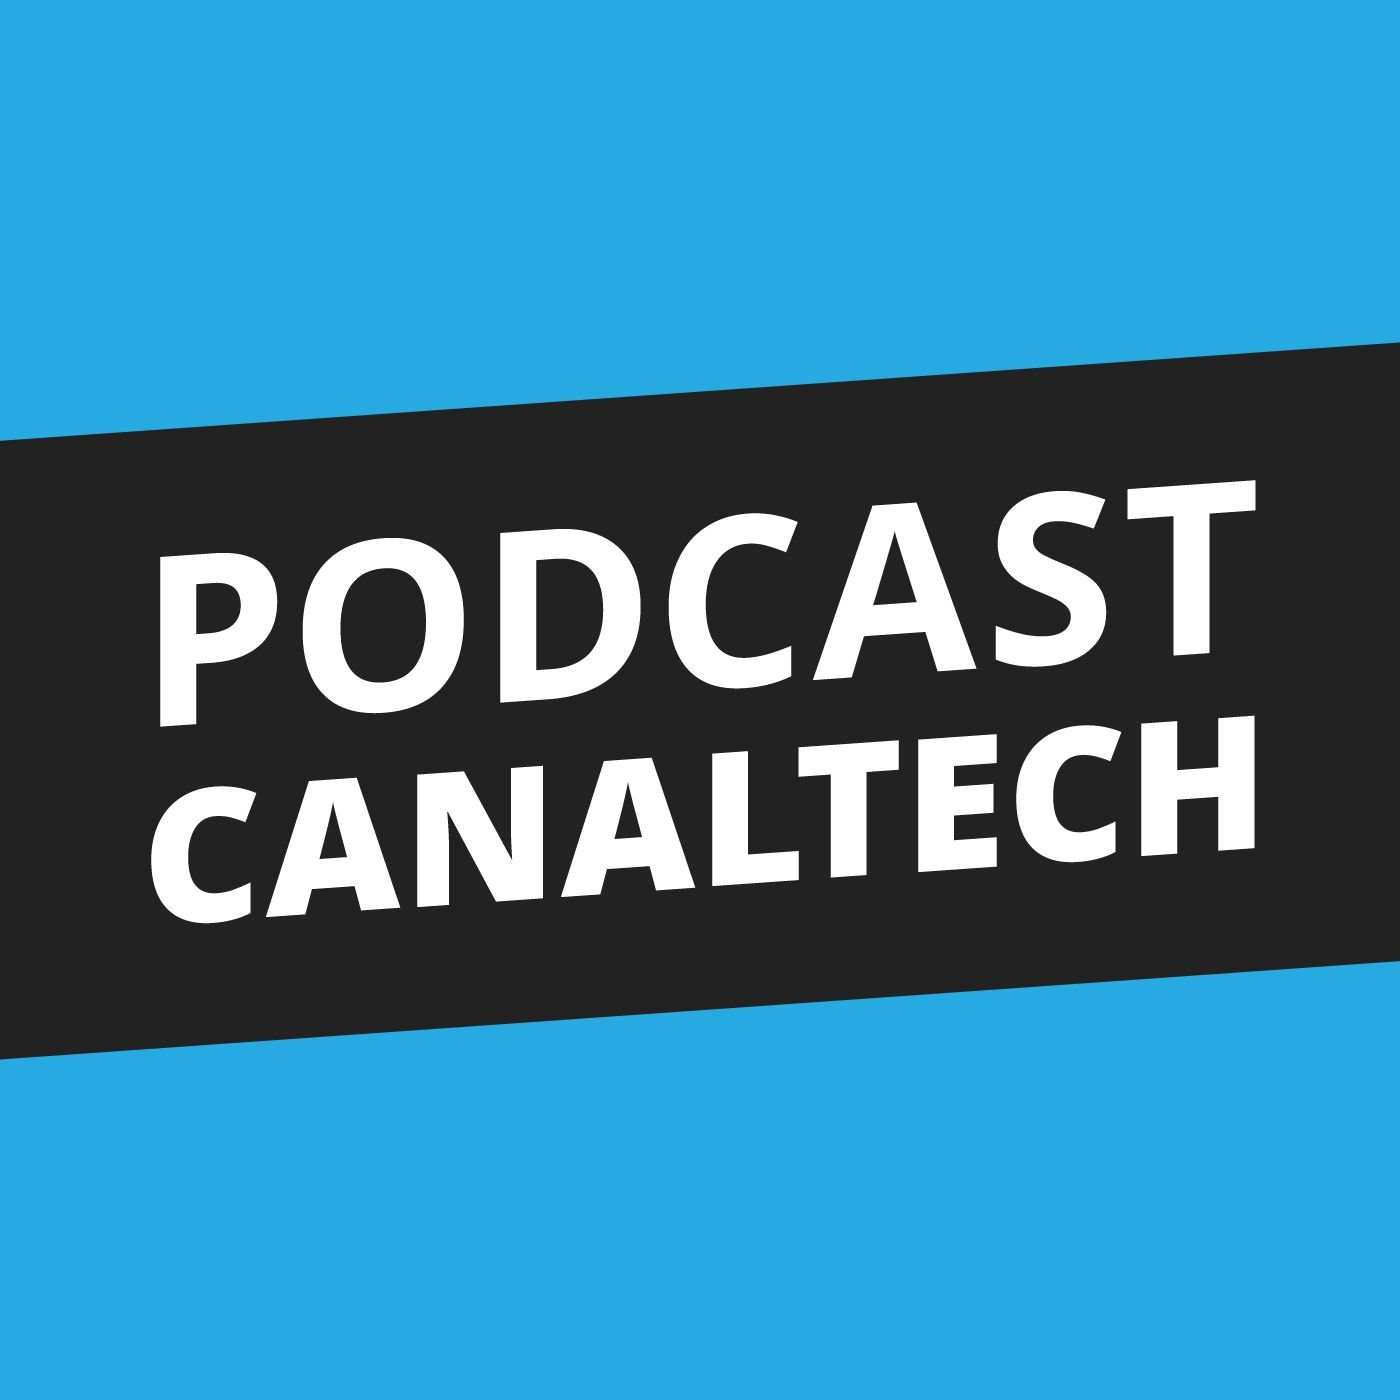 Podcast Canaltech - 27/02/14